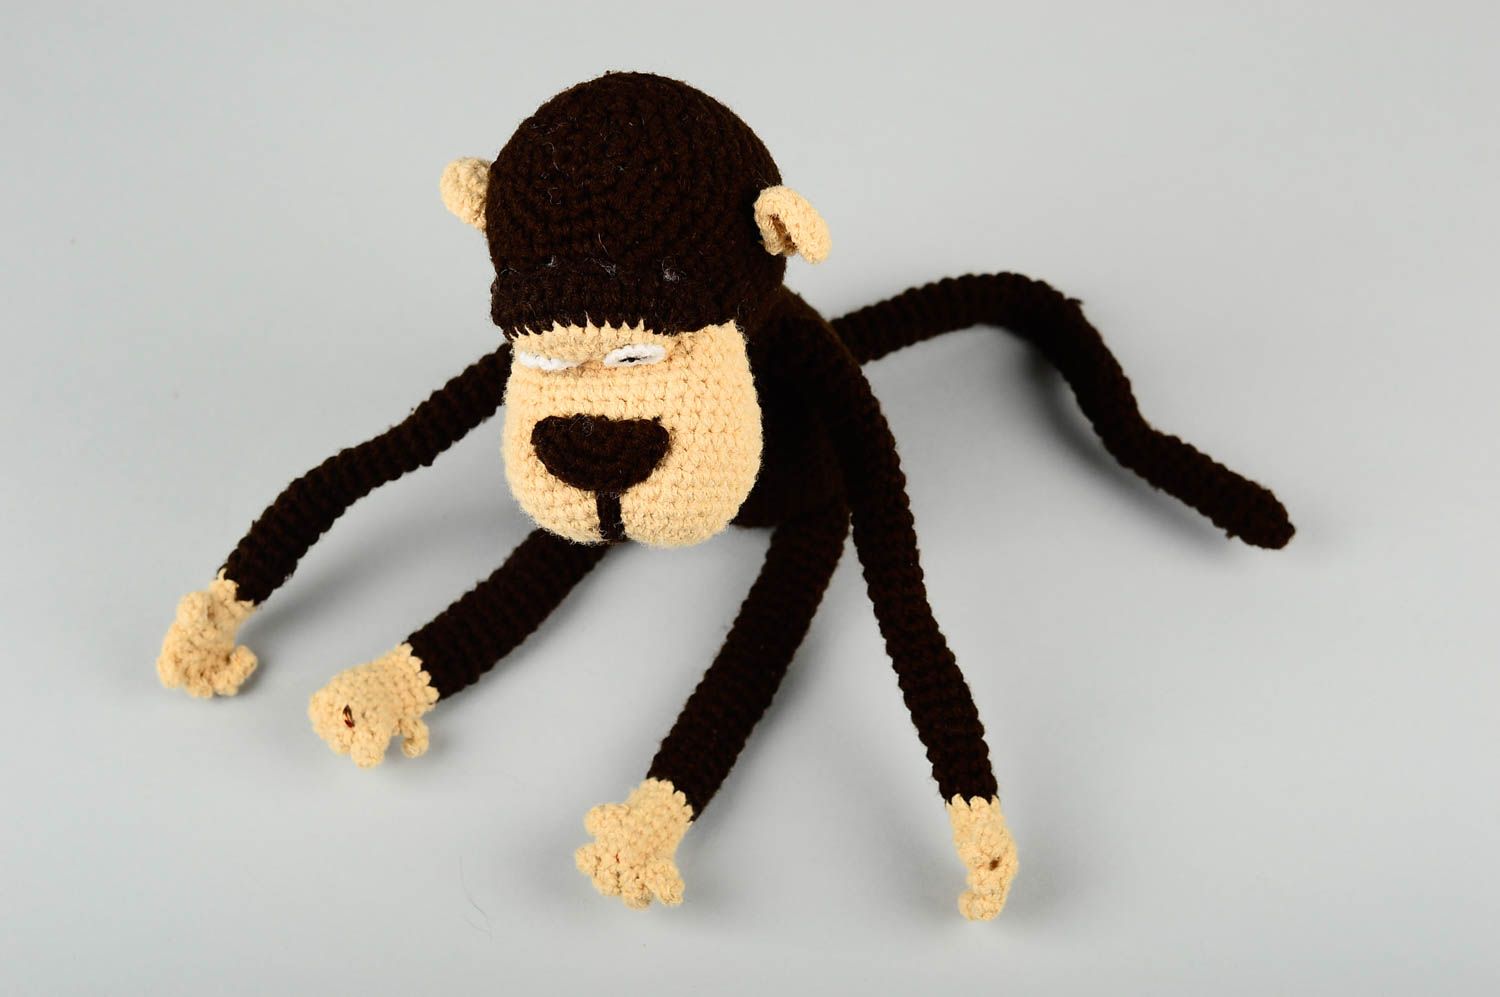 Unusual handmade crochet toy design best toys for kids birthday gift ideas photo 4